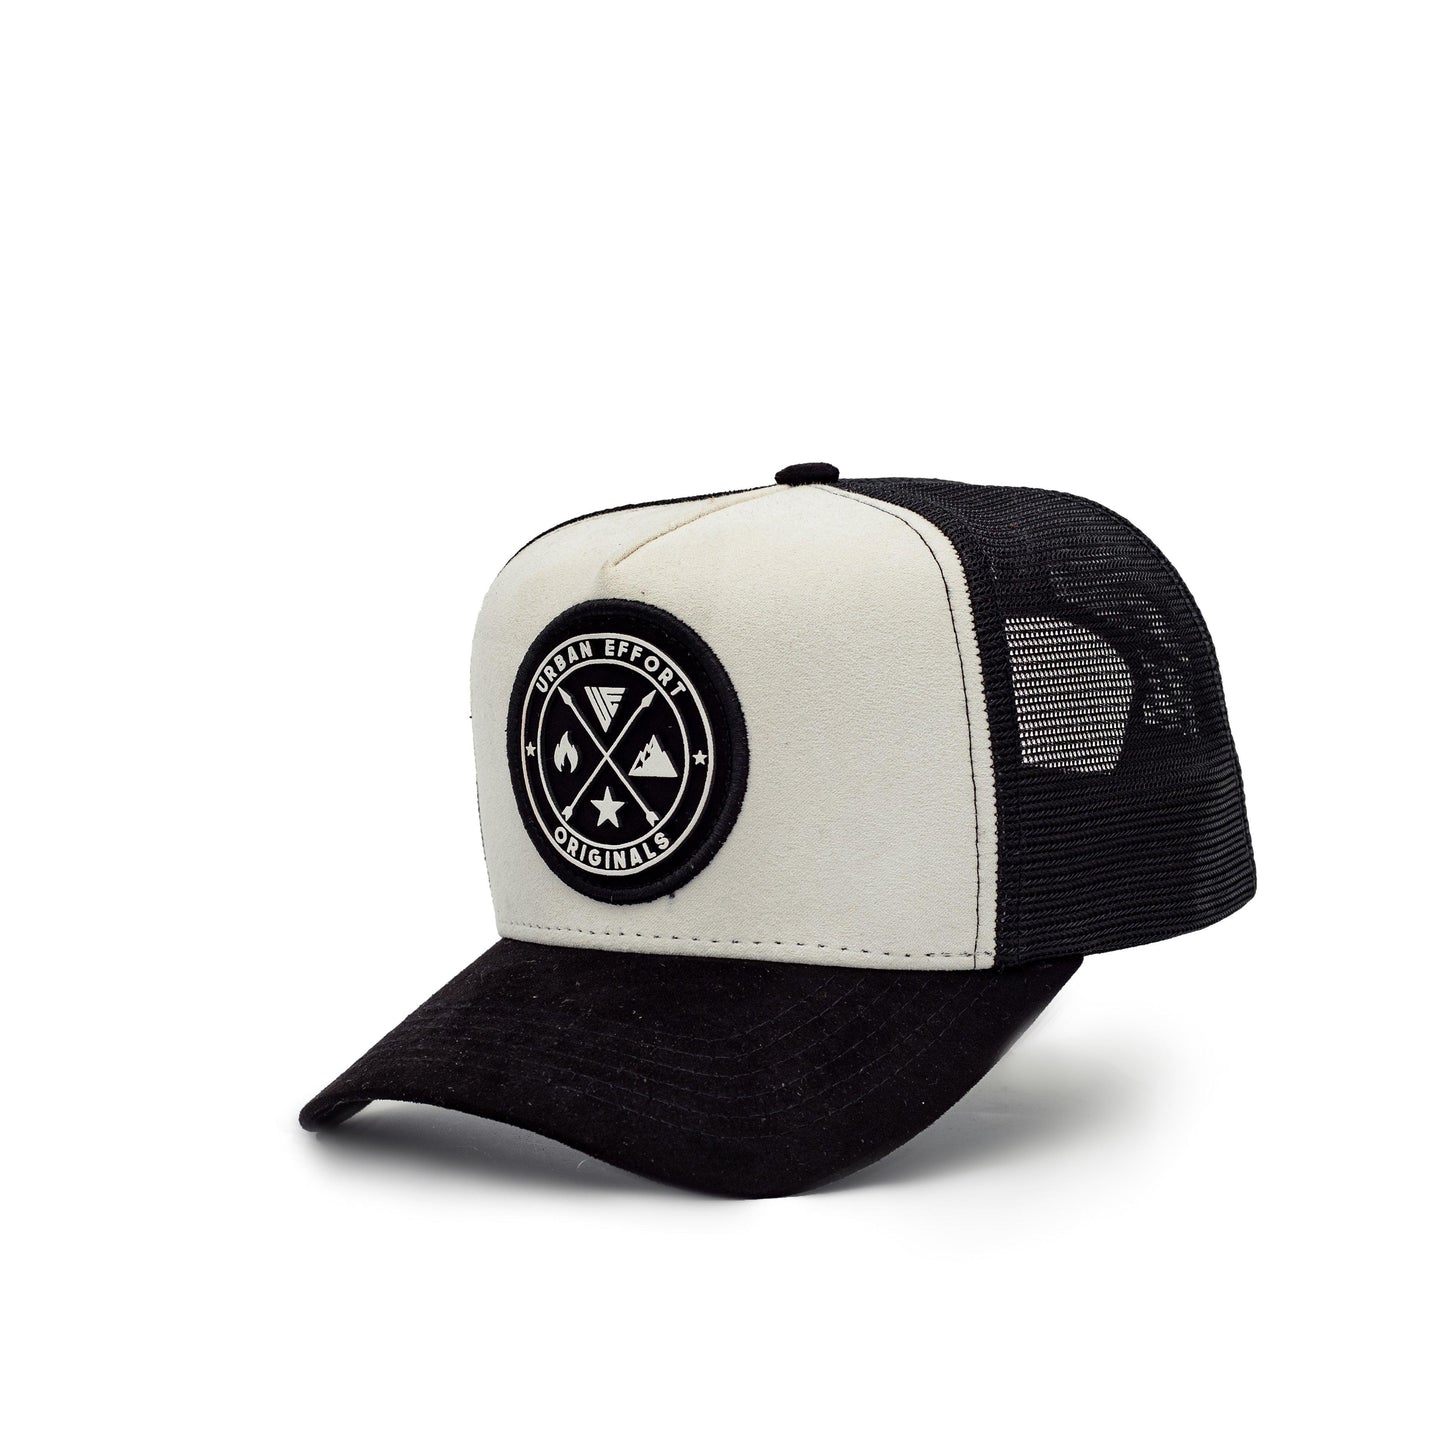 Classic Black & White Trucker Hat Urban Urban | Style | Effort